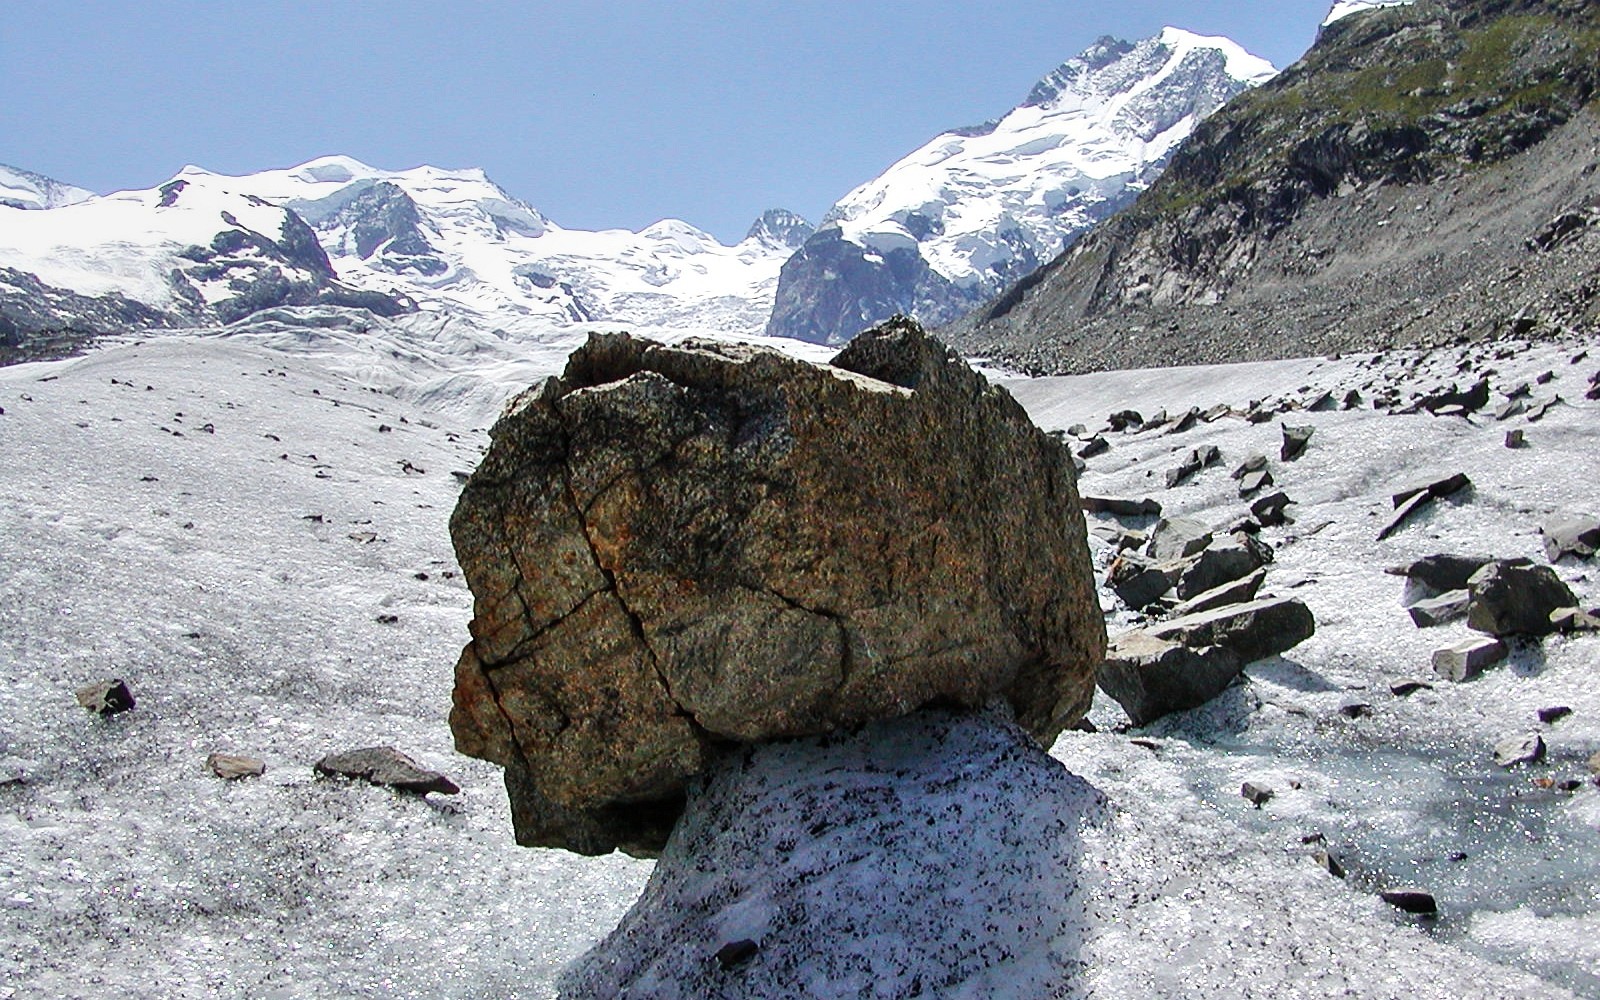 Morteratschgletscher  |  Ice sheltered by rock